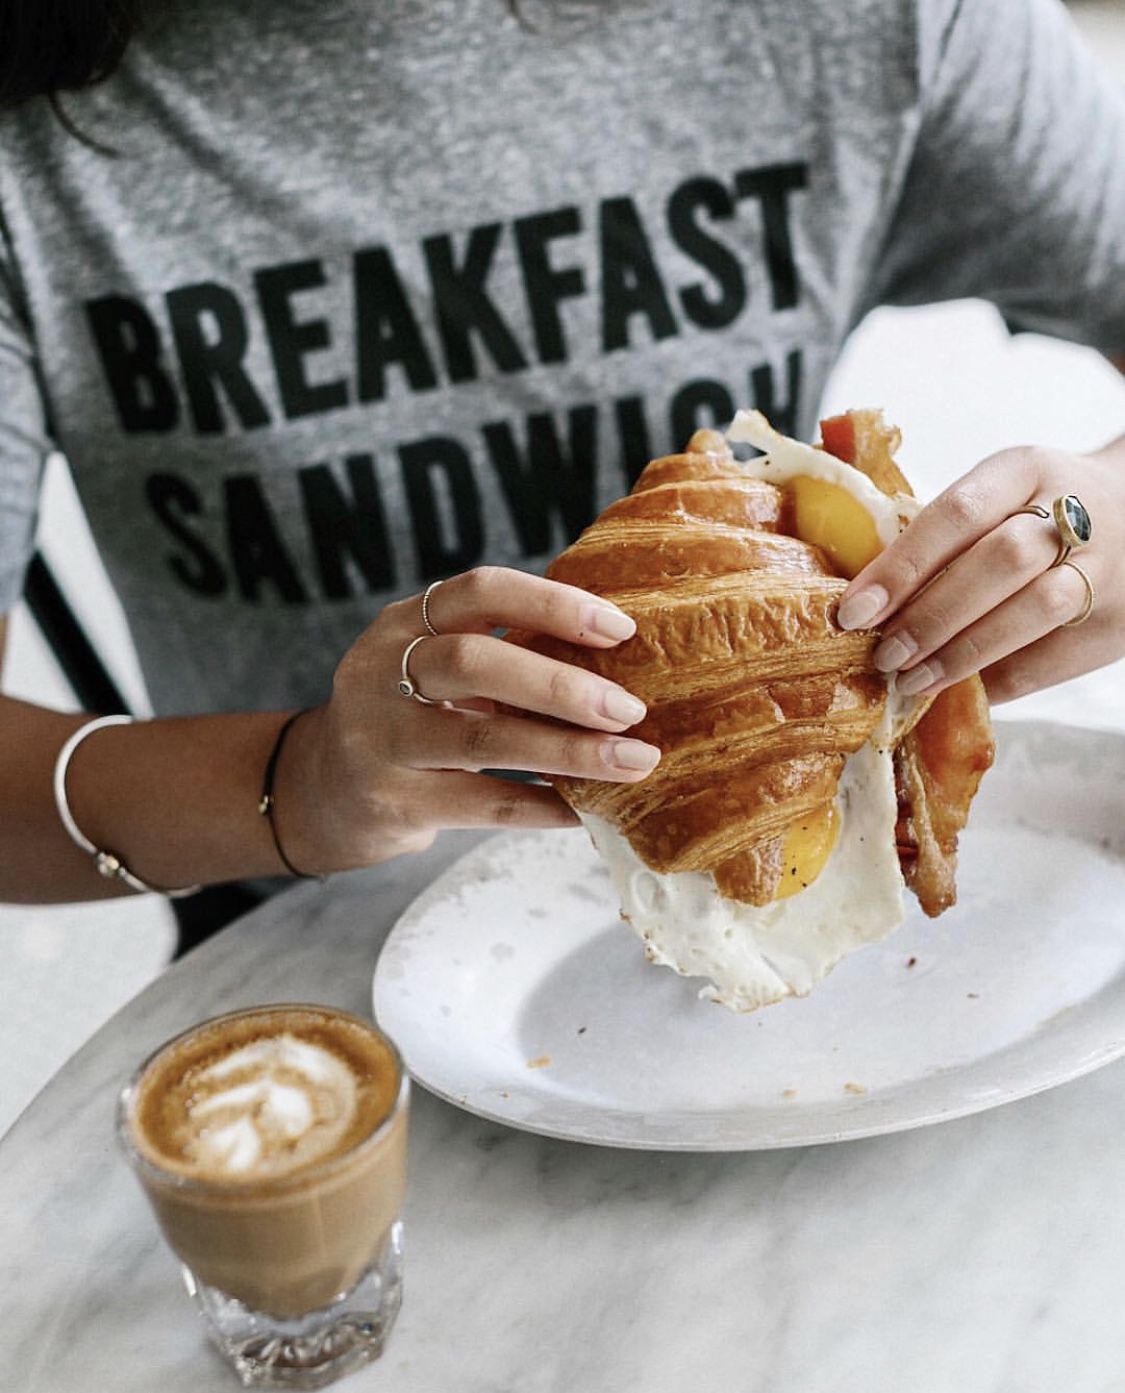 A woman wearing rings holds a croissant sandwich. Her shirt reads “Breakfast Sandwich.”